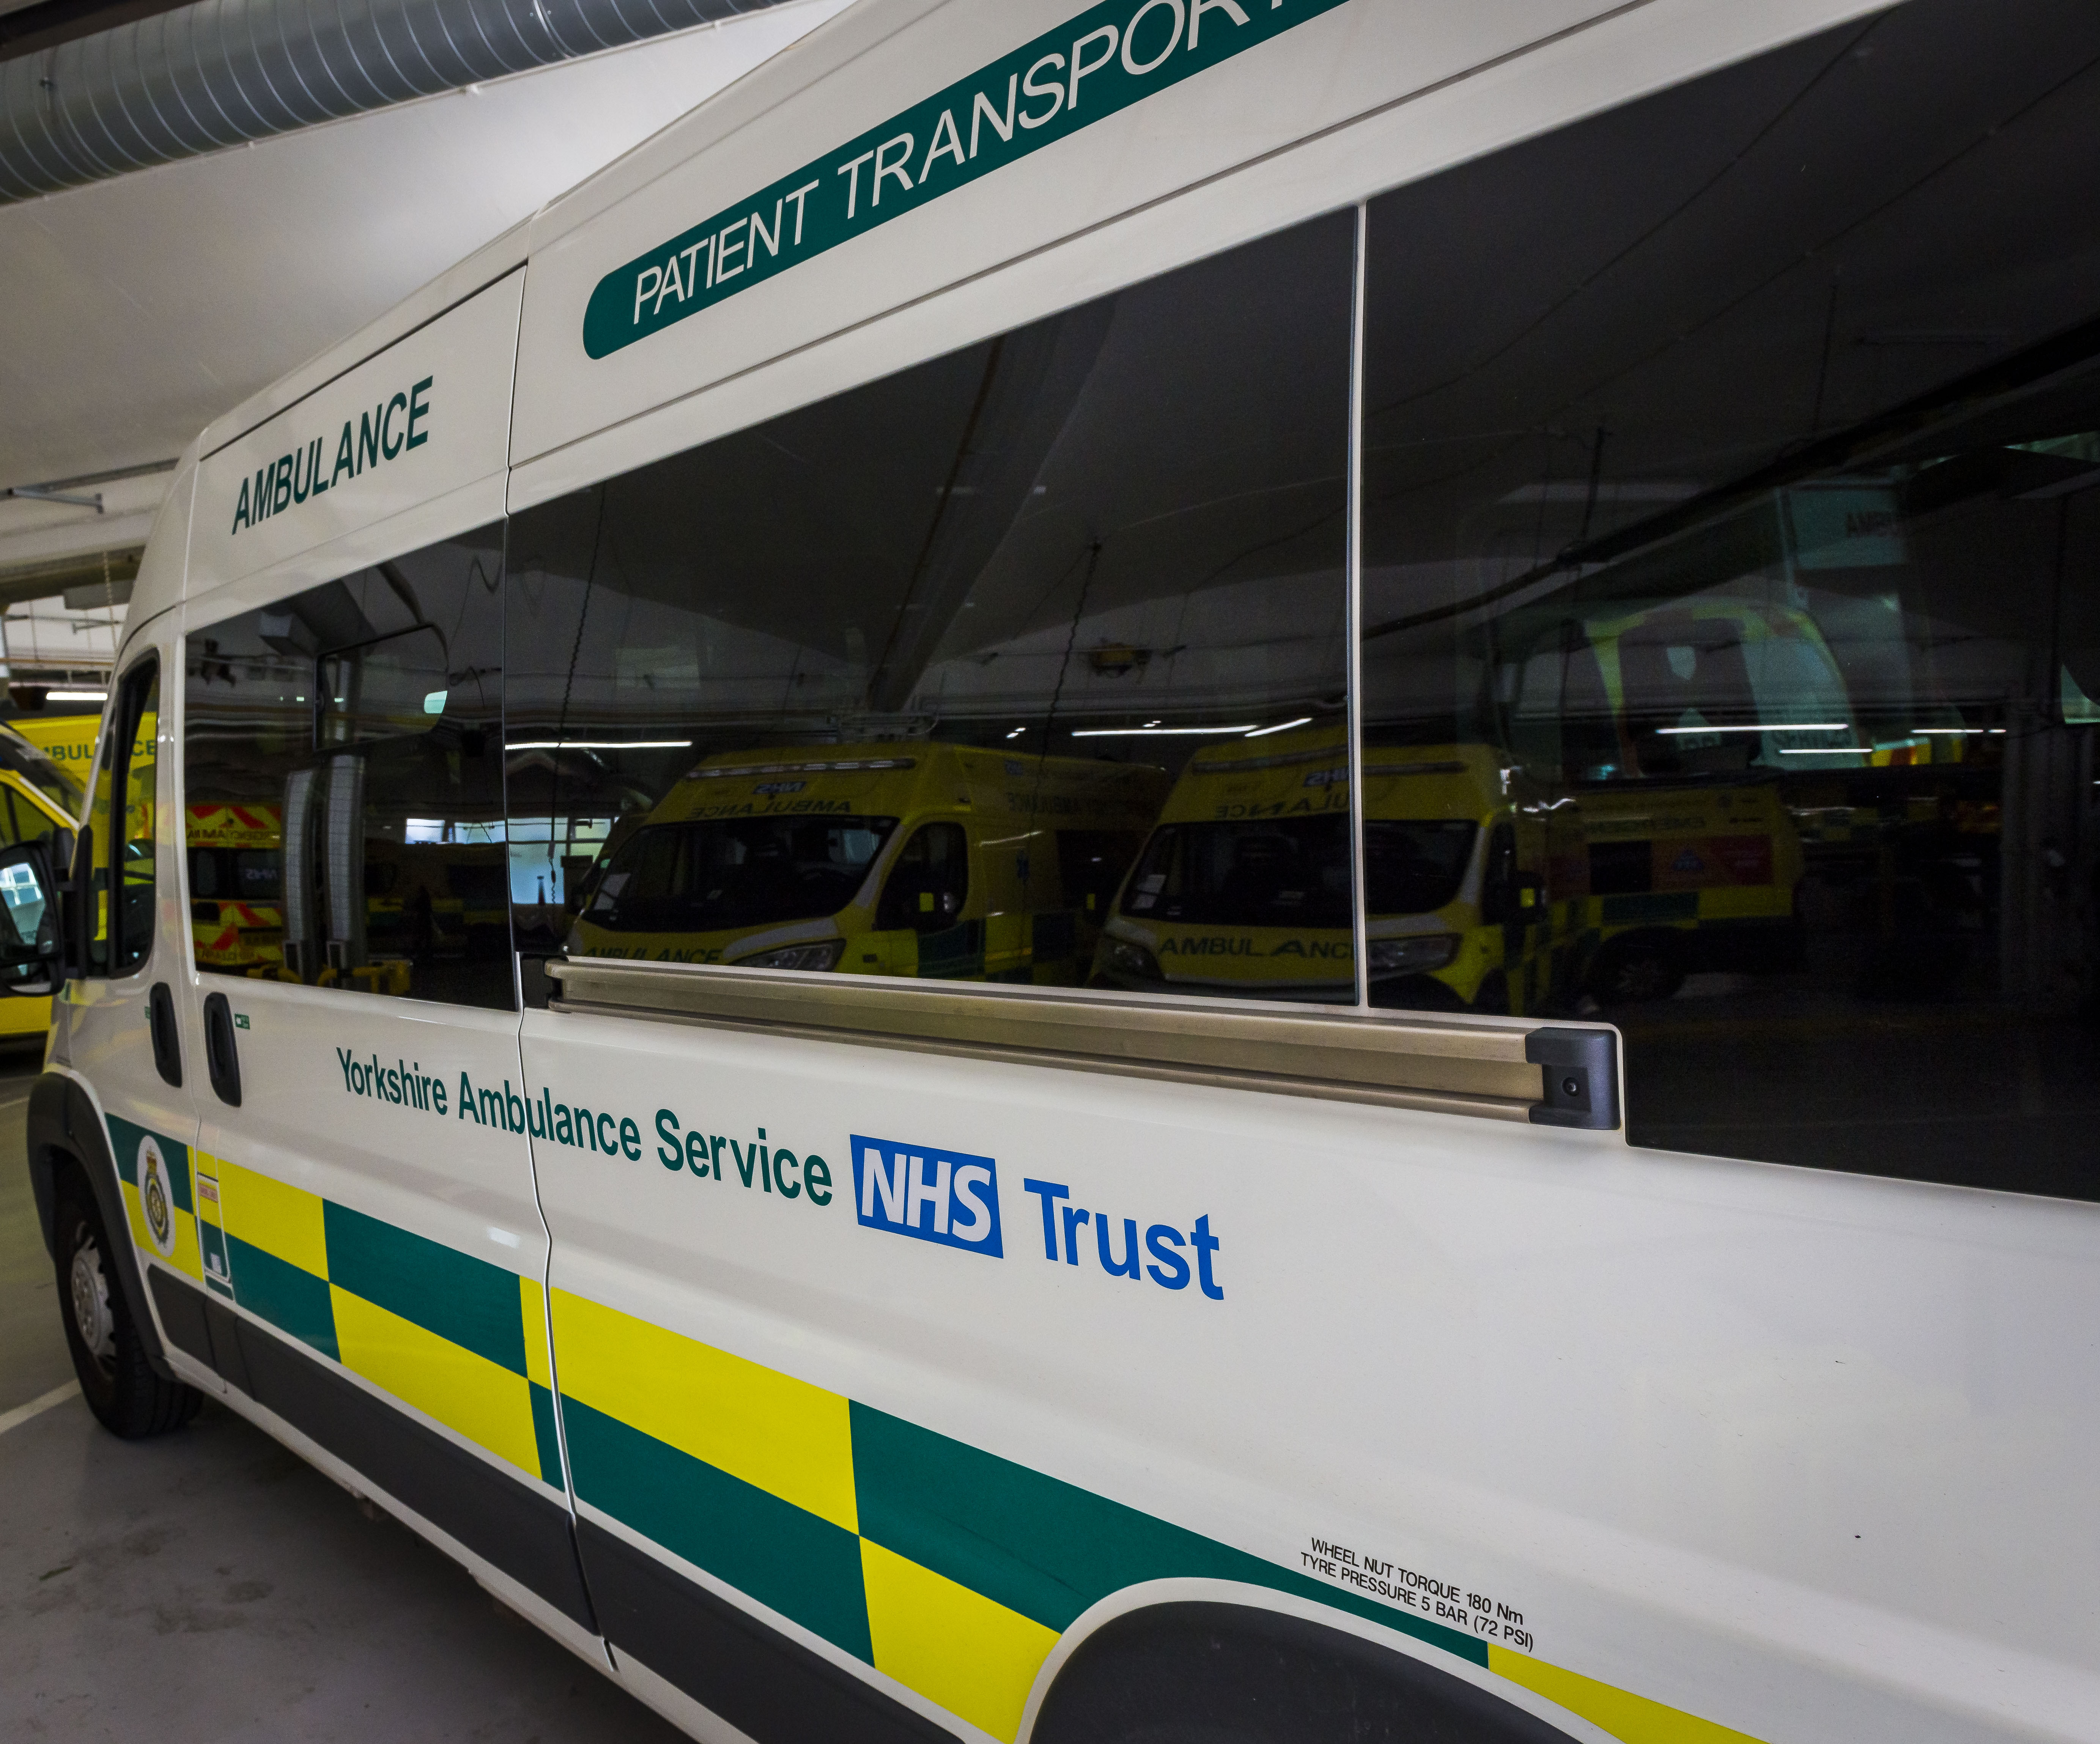 non-emergency Patient Transport Service vehicle